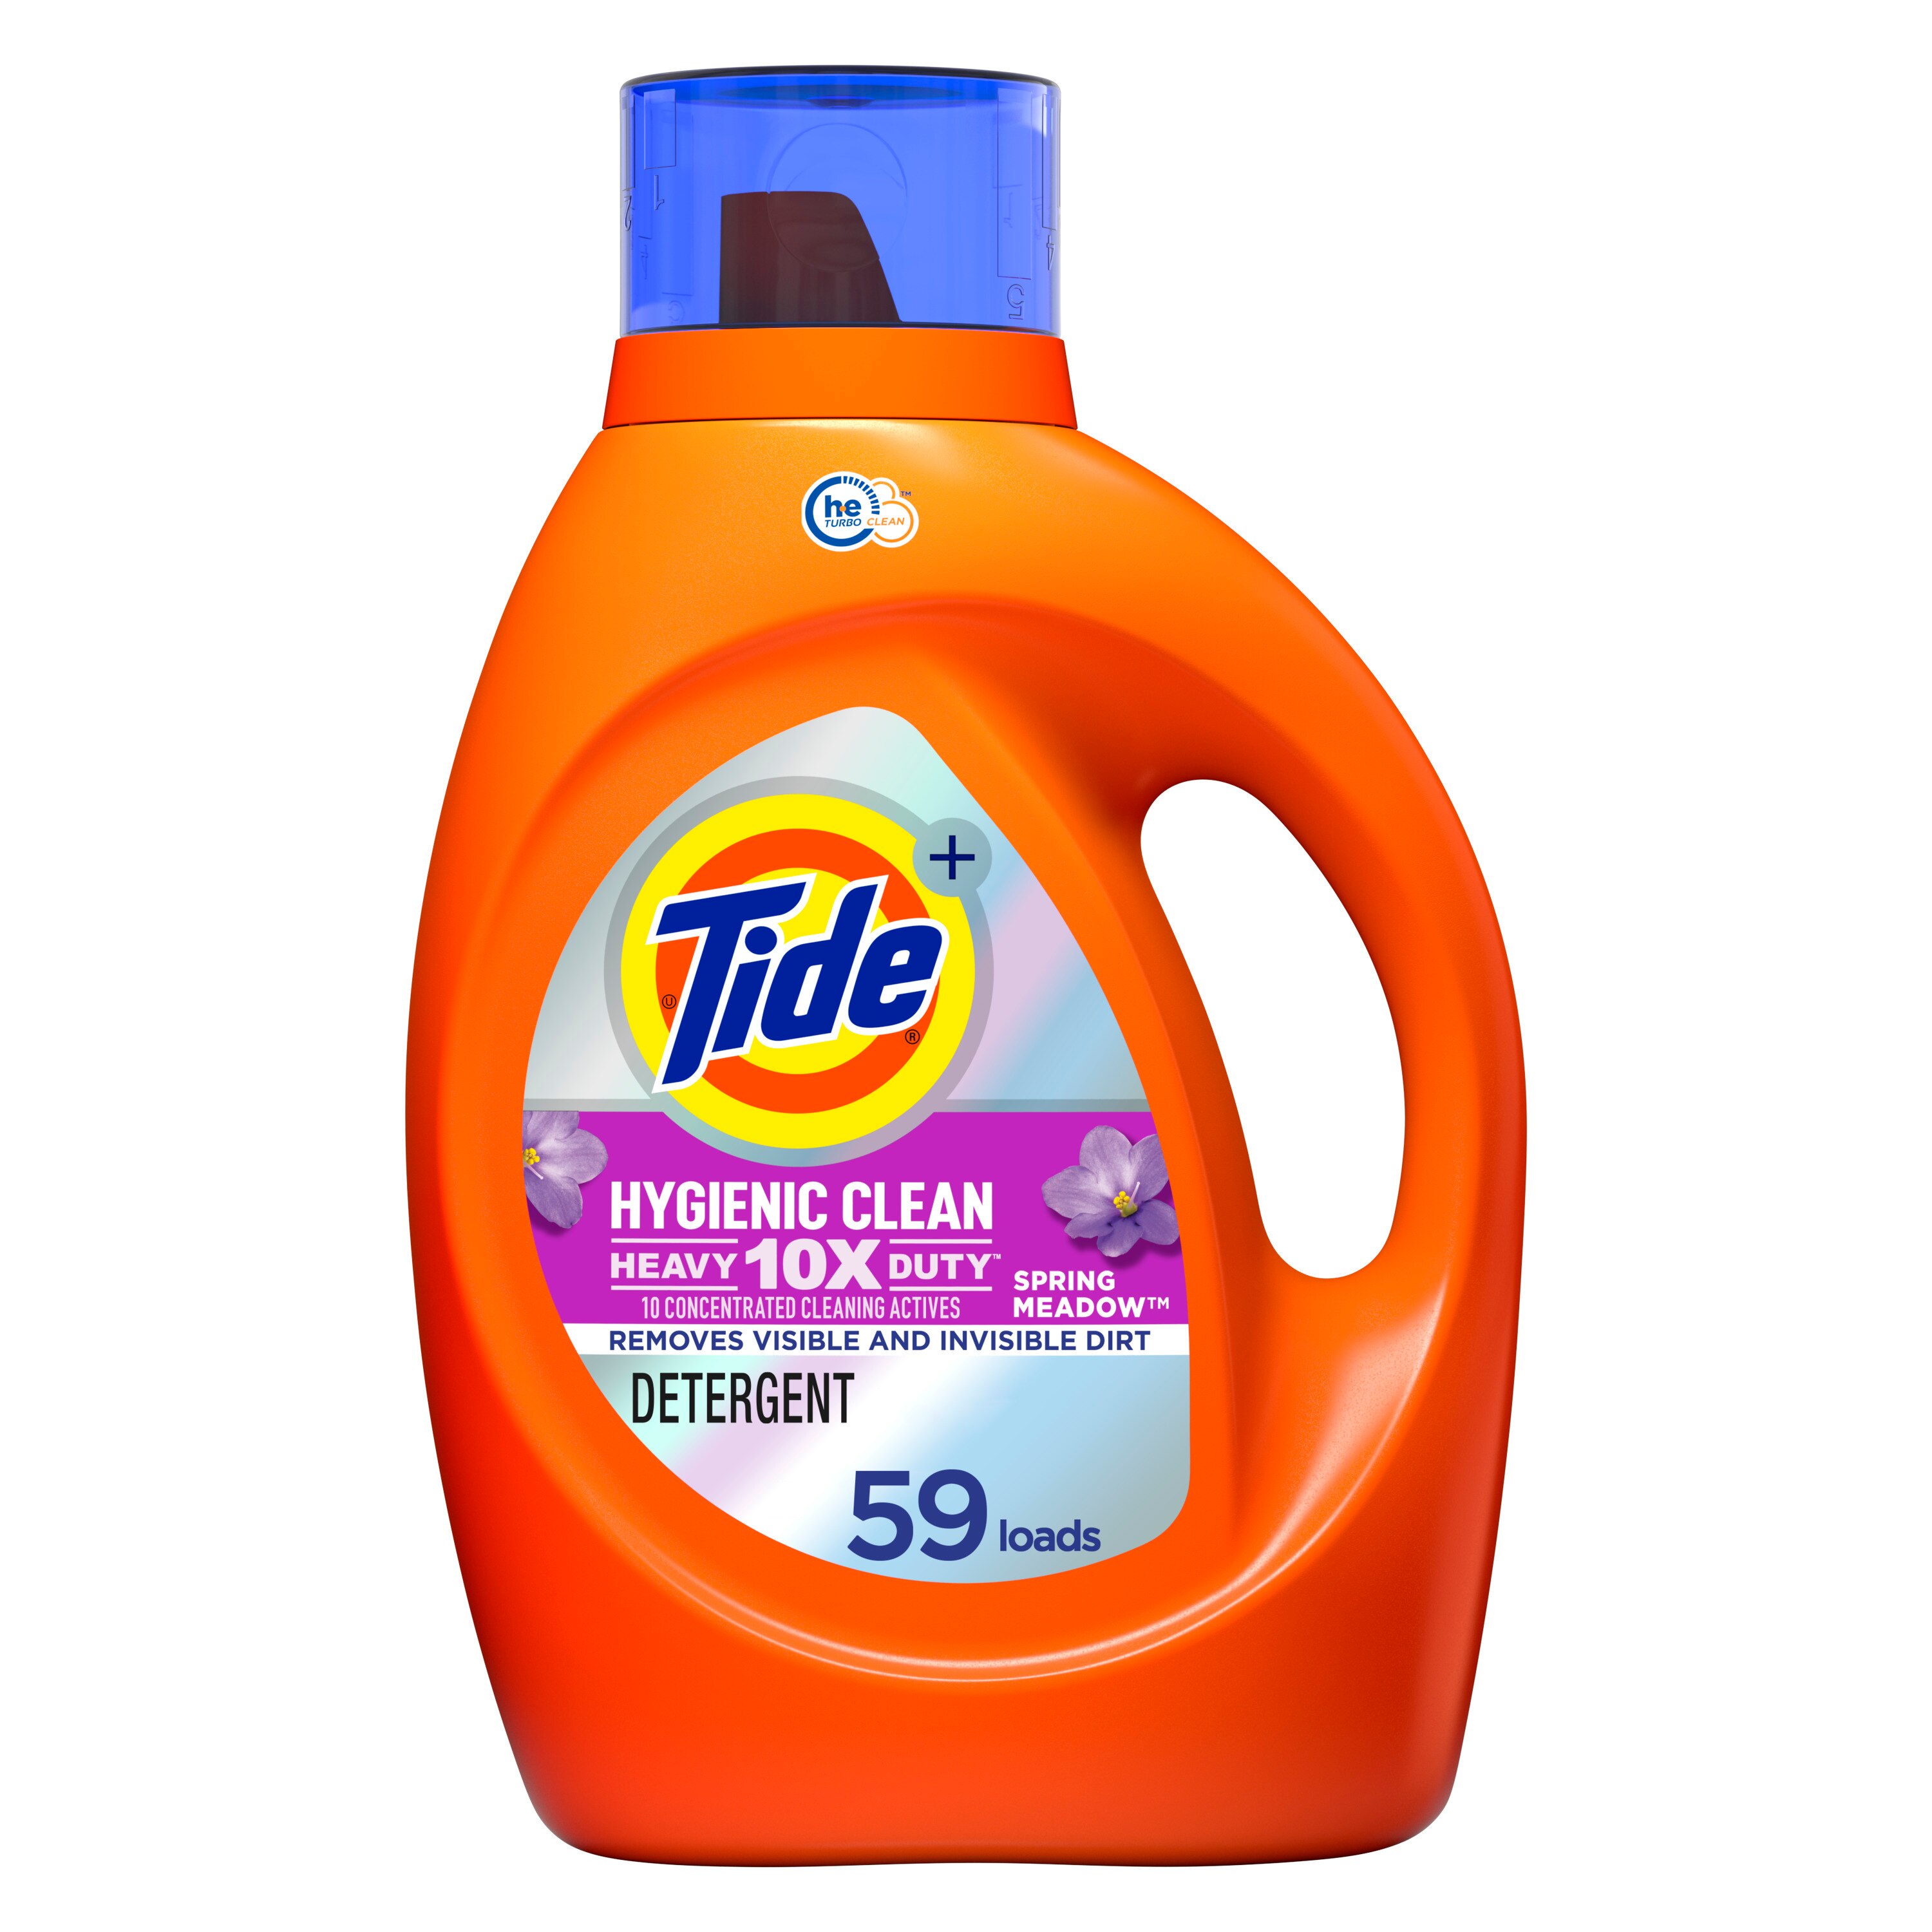 Tide Hygienic Clean Heavy 10x Duty Liquid Laundry Detergent, Spring Meadow, 59 Loads, 92 fl oz, HE Compatible